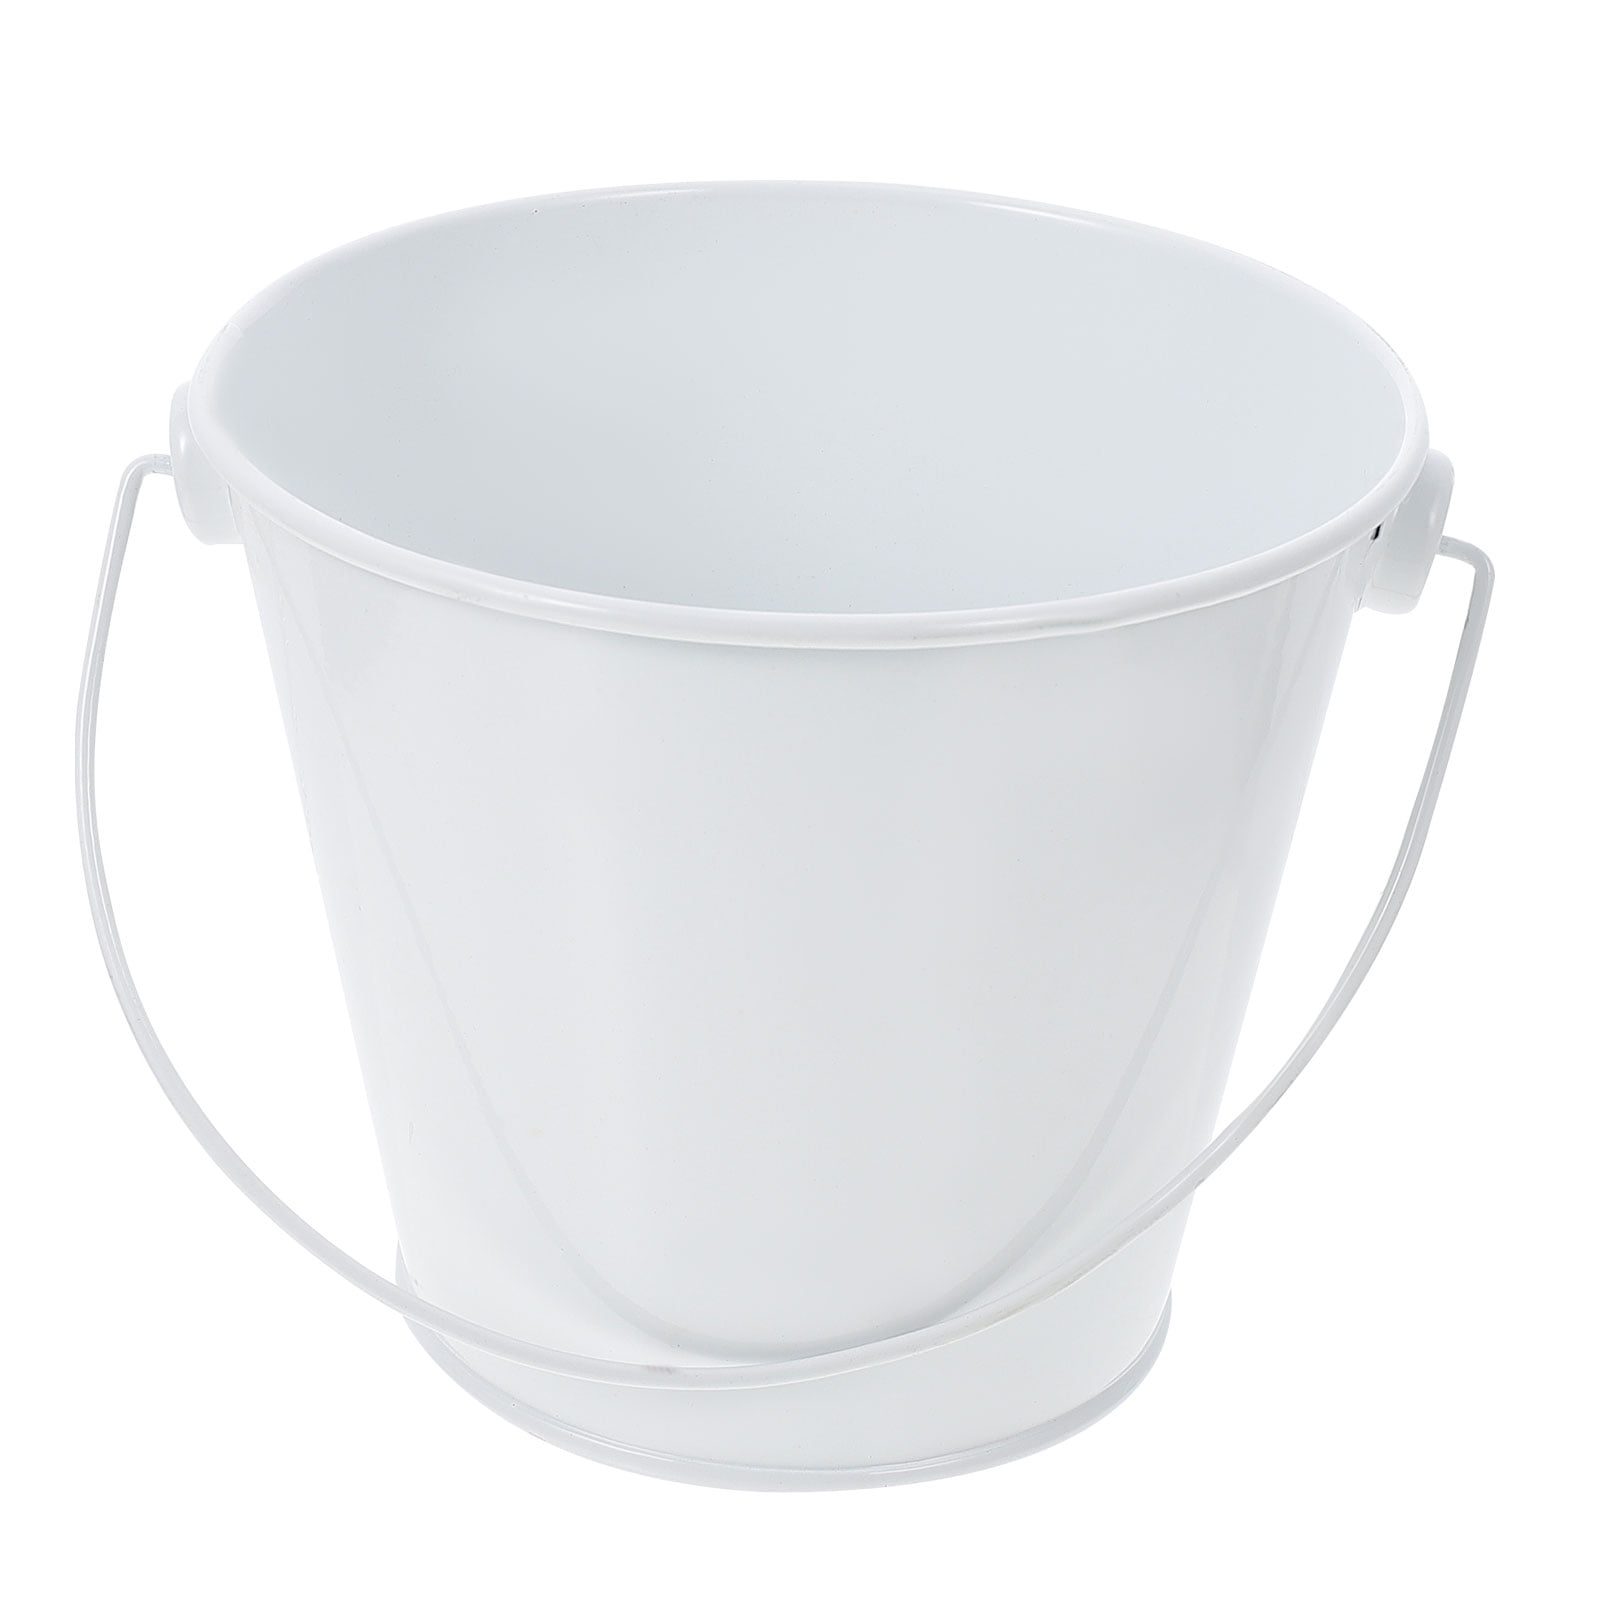 Small Galvanized Buckets Handles